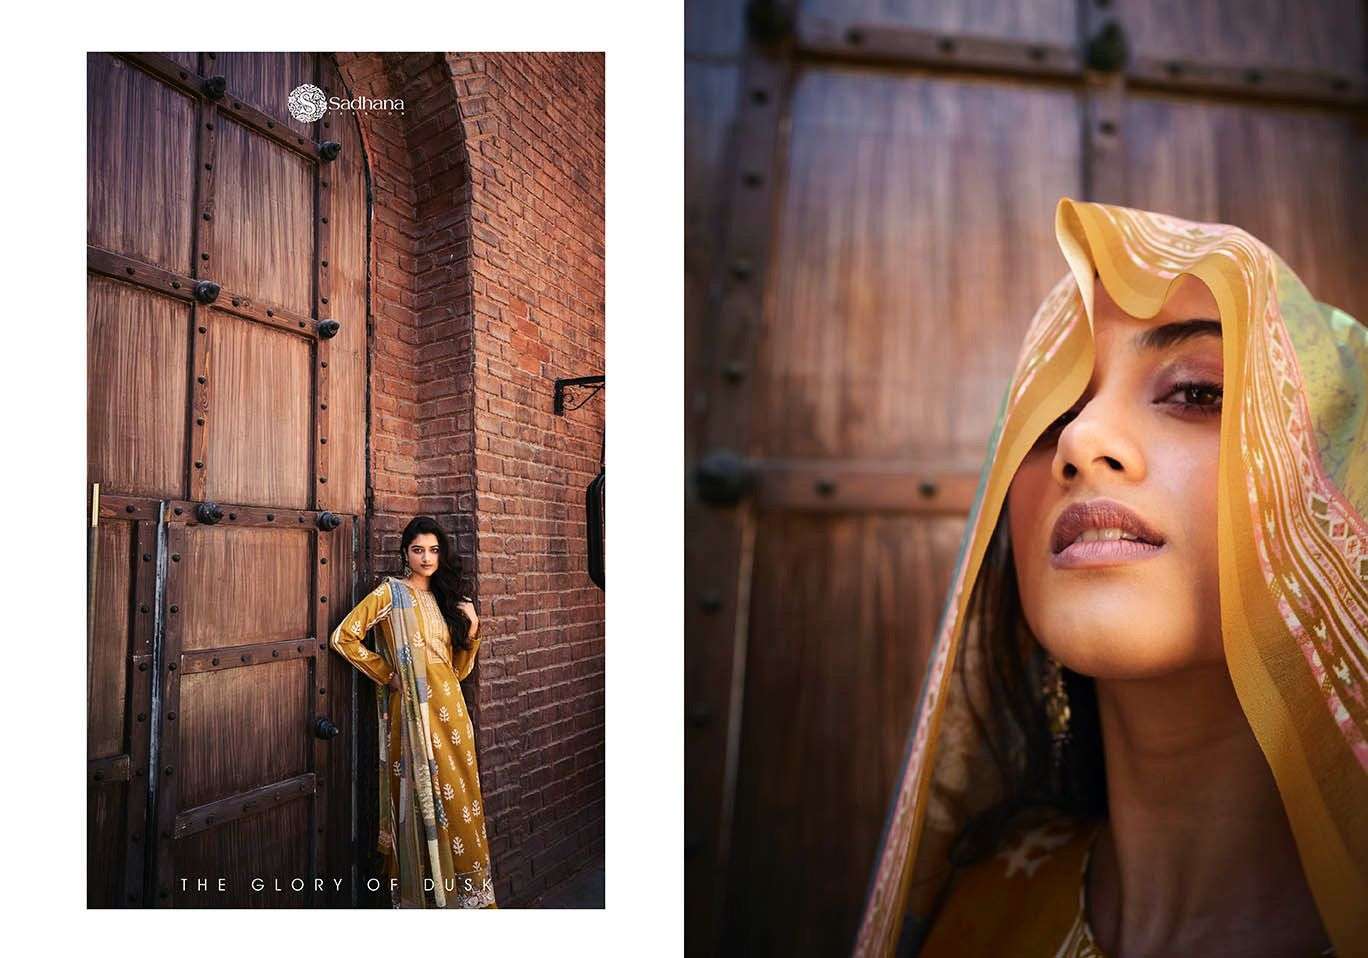 sadhana fashion summer bonanza vol-2 2156-2165 series indian designer salwar kameez catalogue online supplier surat 